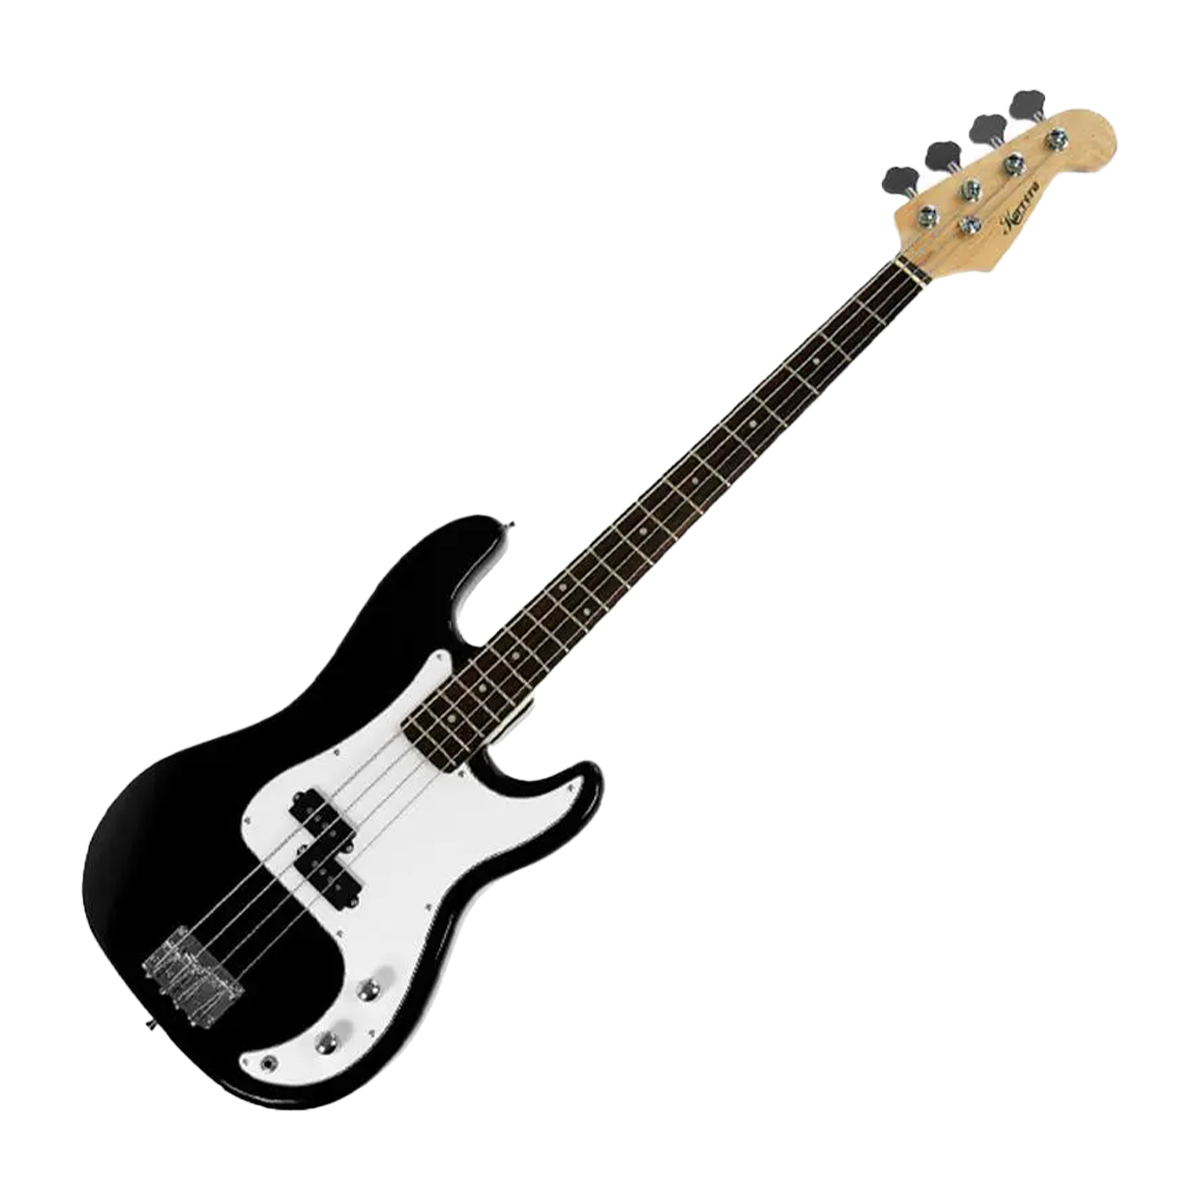 Karrera 4-String Electric Bass Guitar Musical Instrument - Black